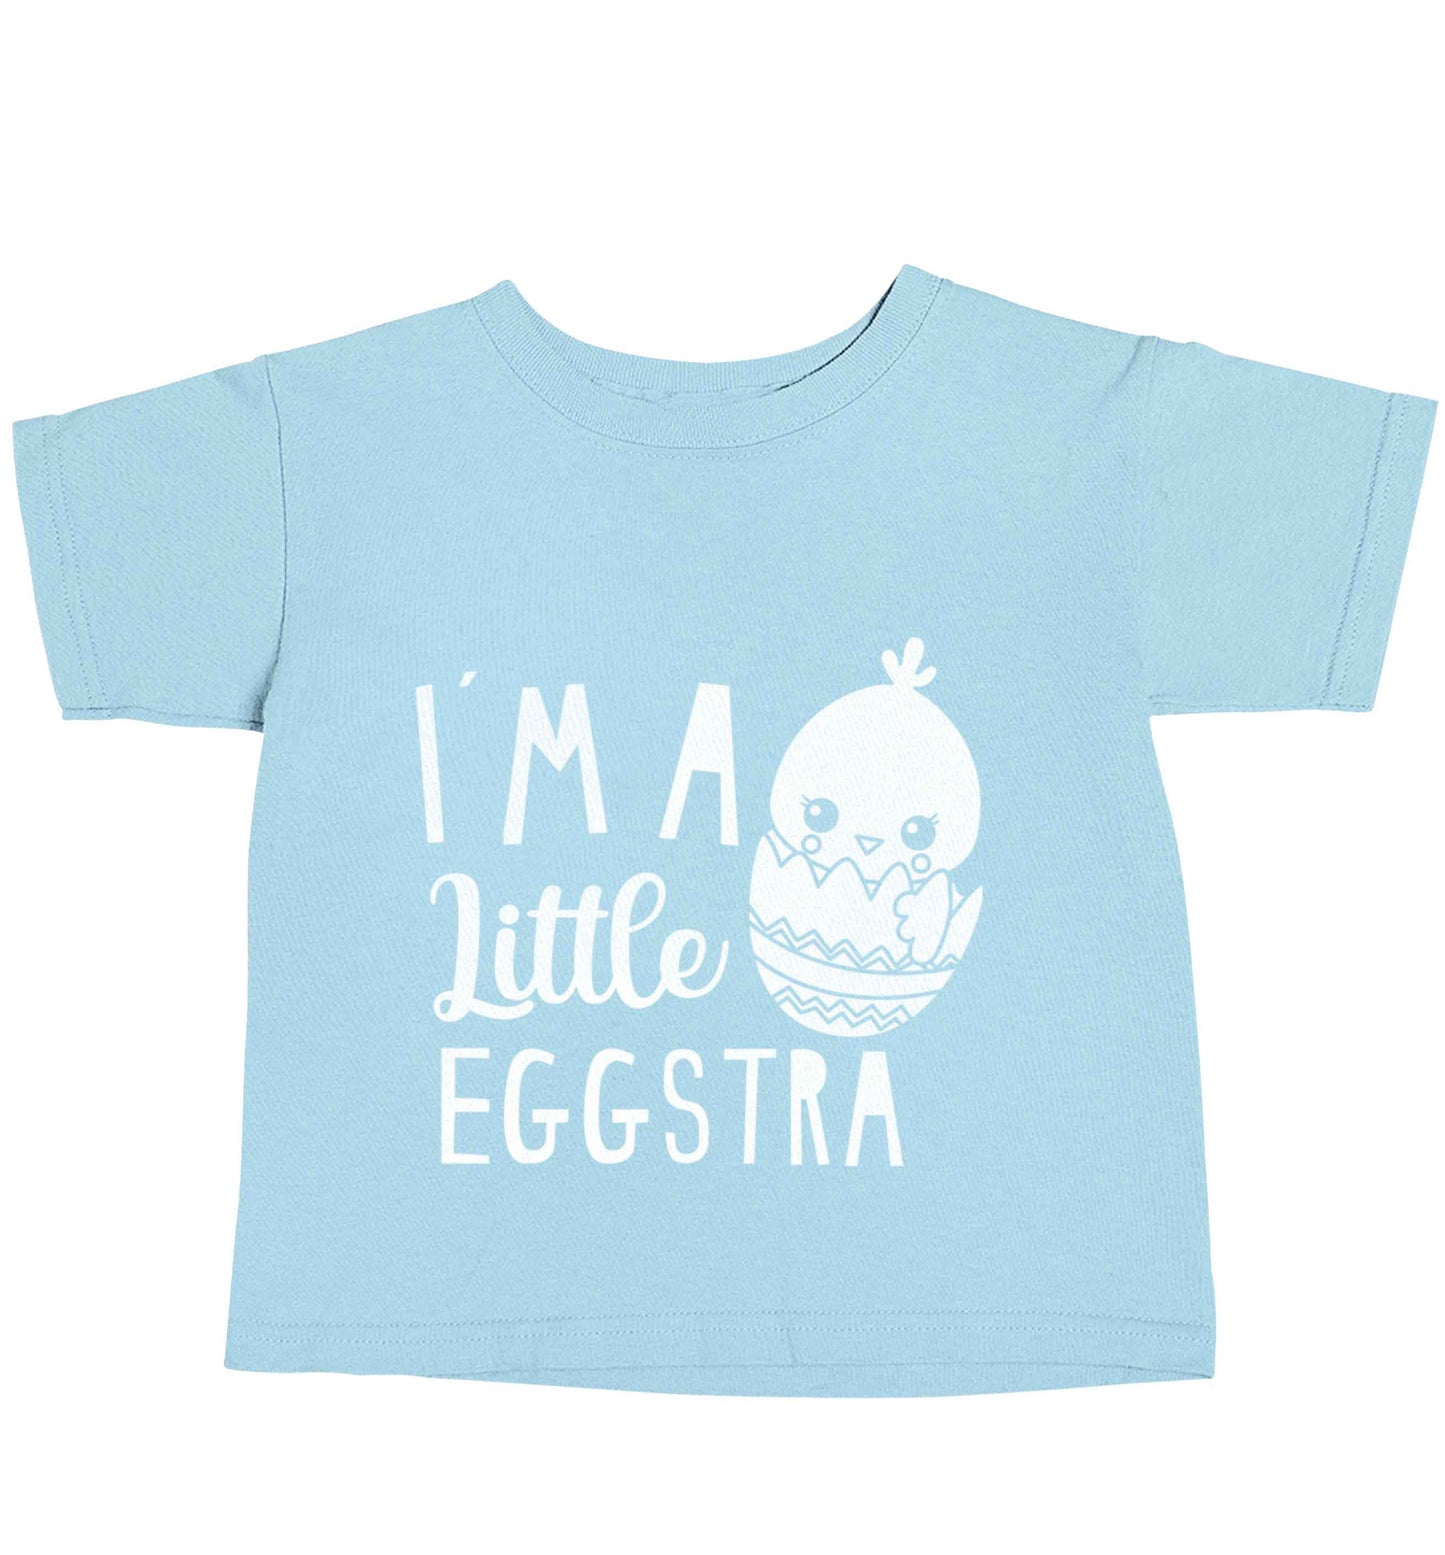 I'm a little eggstra light blue baby toddler Tshirt 2 Years